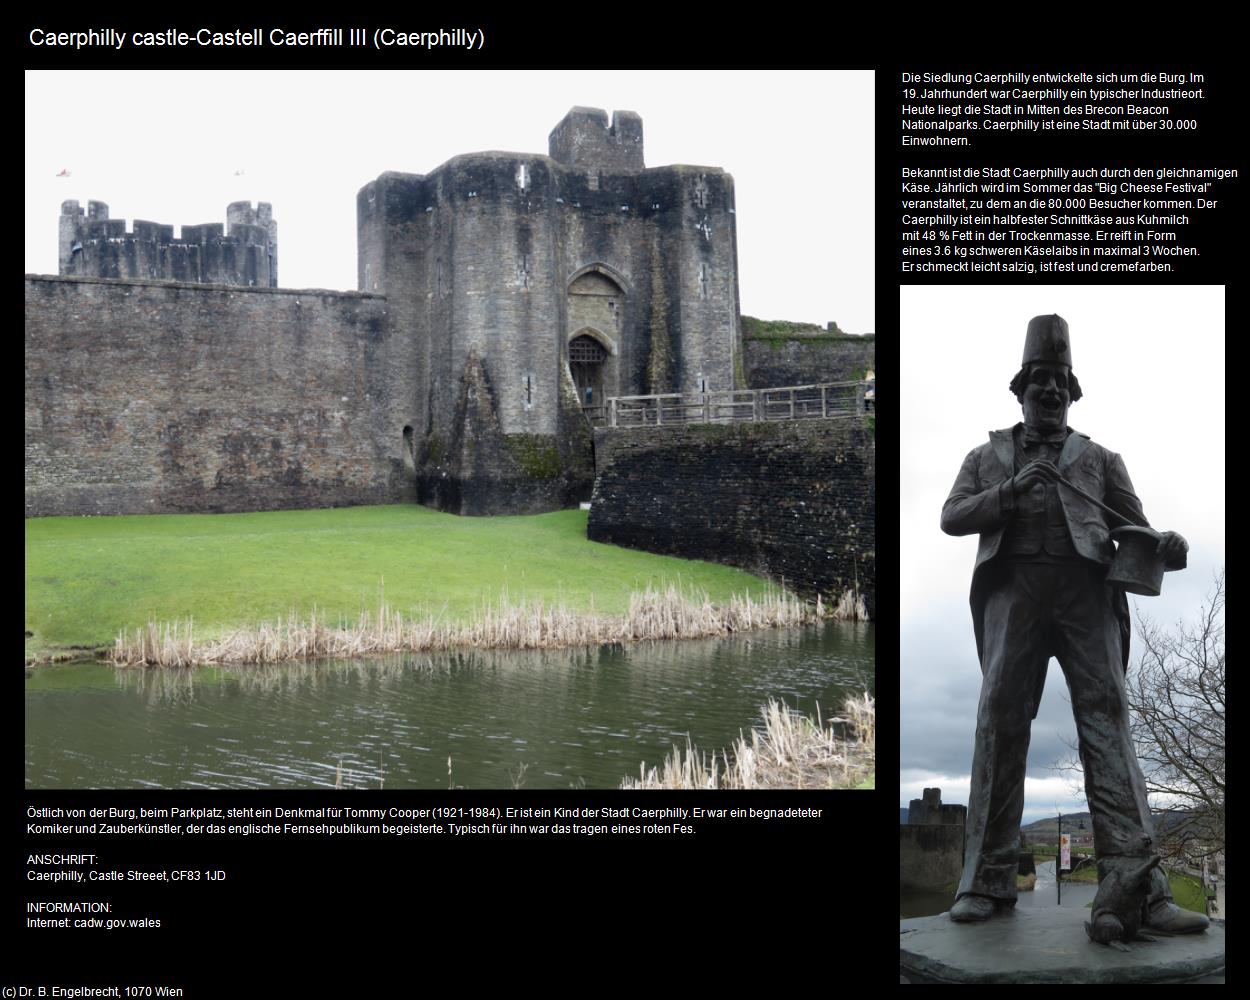 Caerphilly castle III (Caerphilly, Wales) in Kulturatlas-ENGLAND und WALES